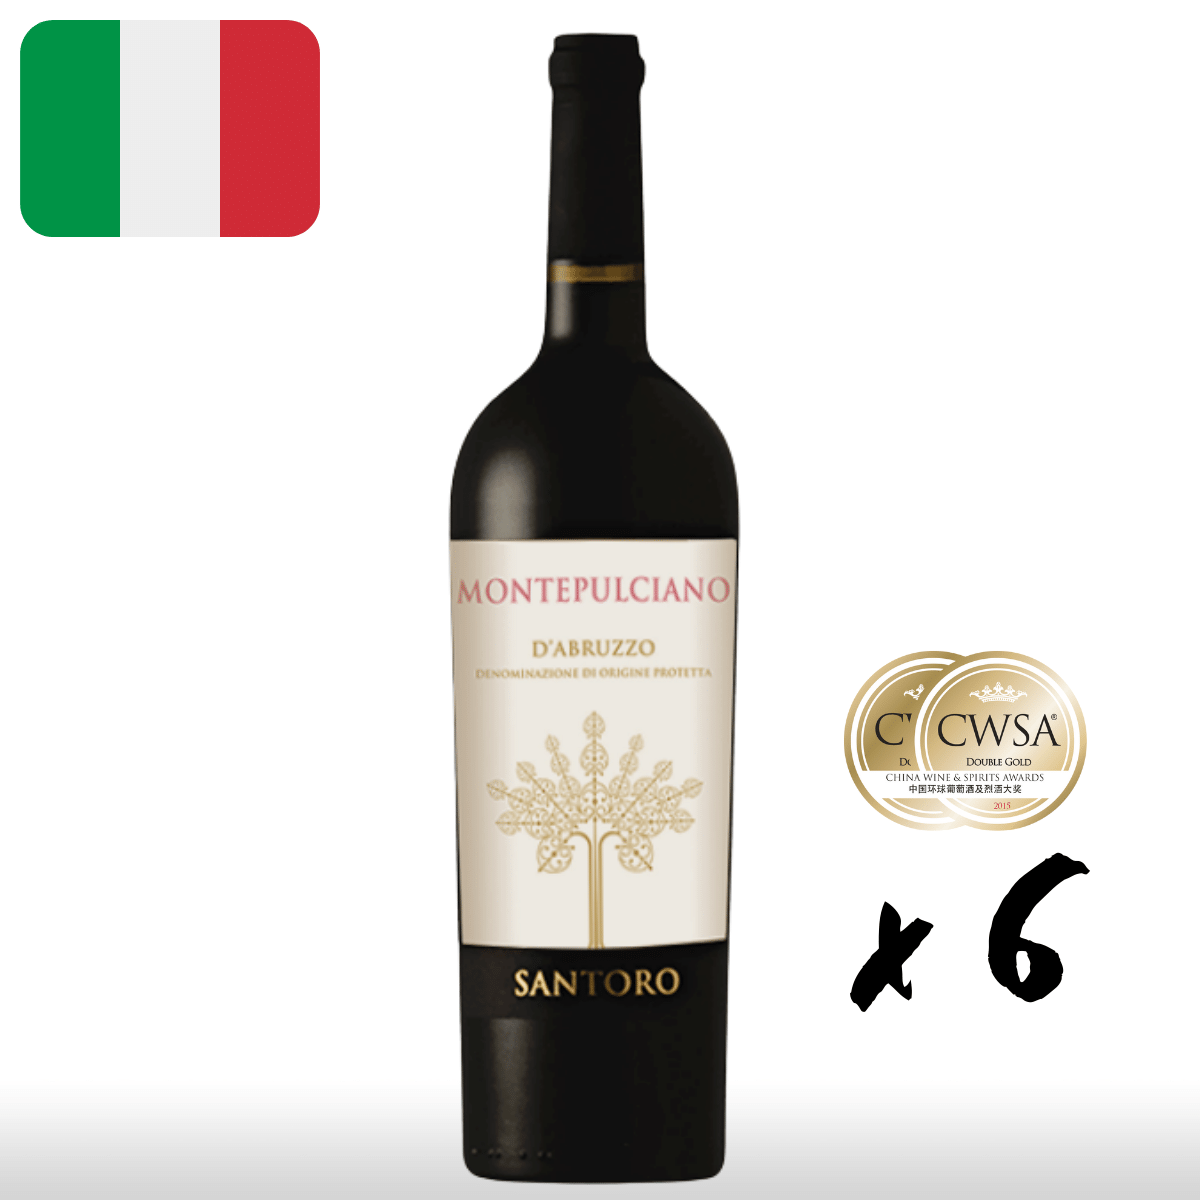 Santoro Montepulciano d'Abruzzo wine bottle1